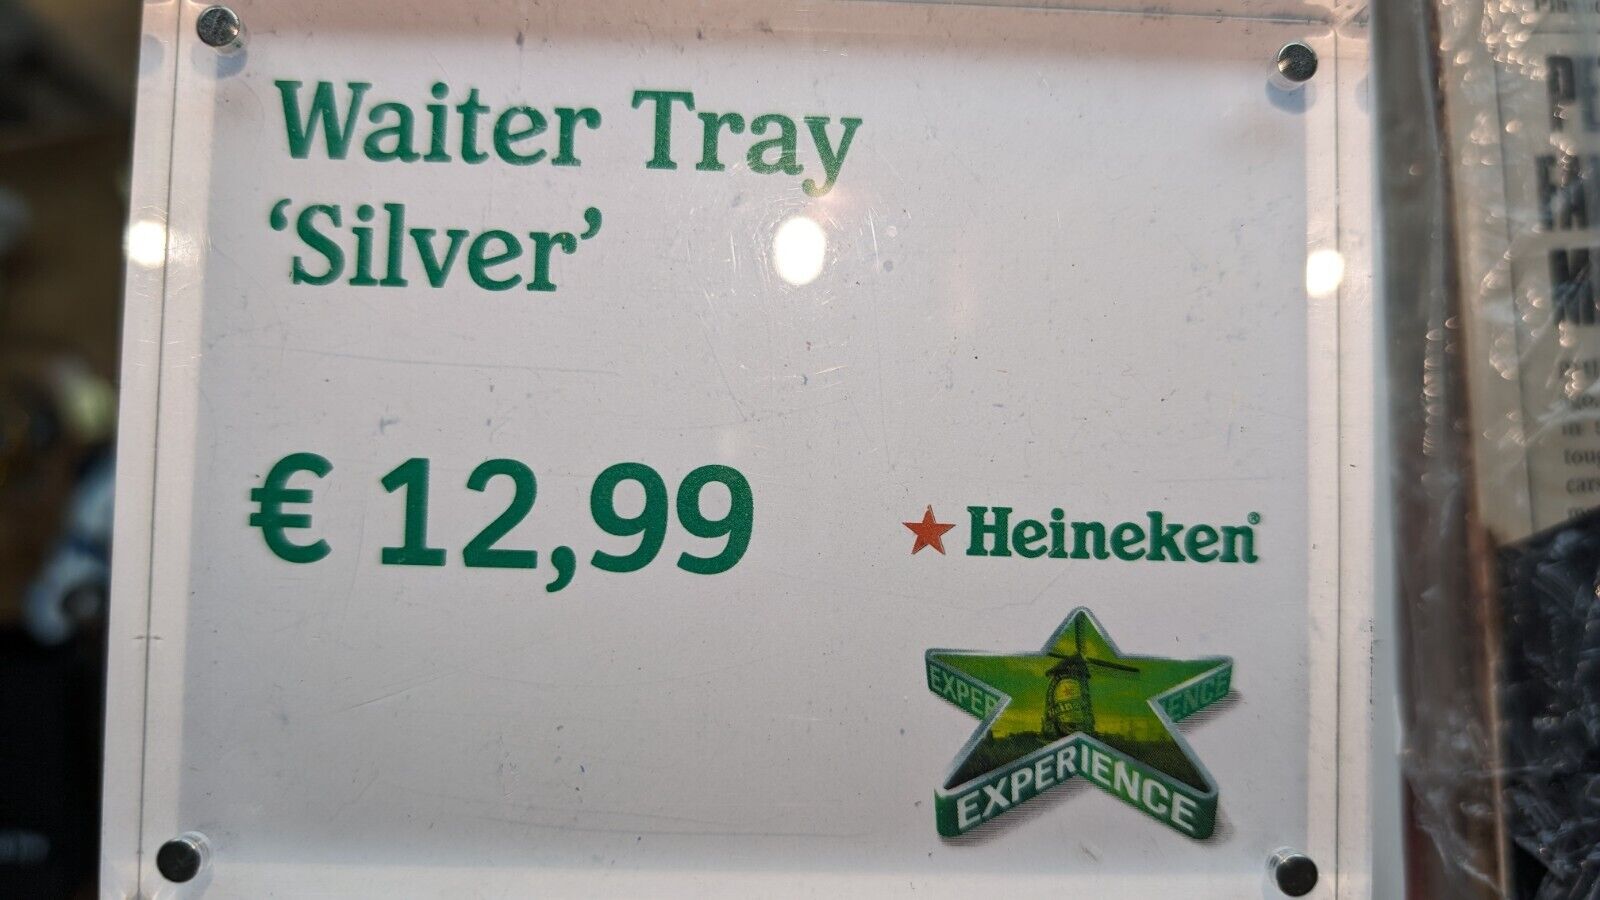 Heineken experience waiter tray \